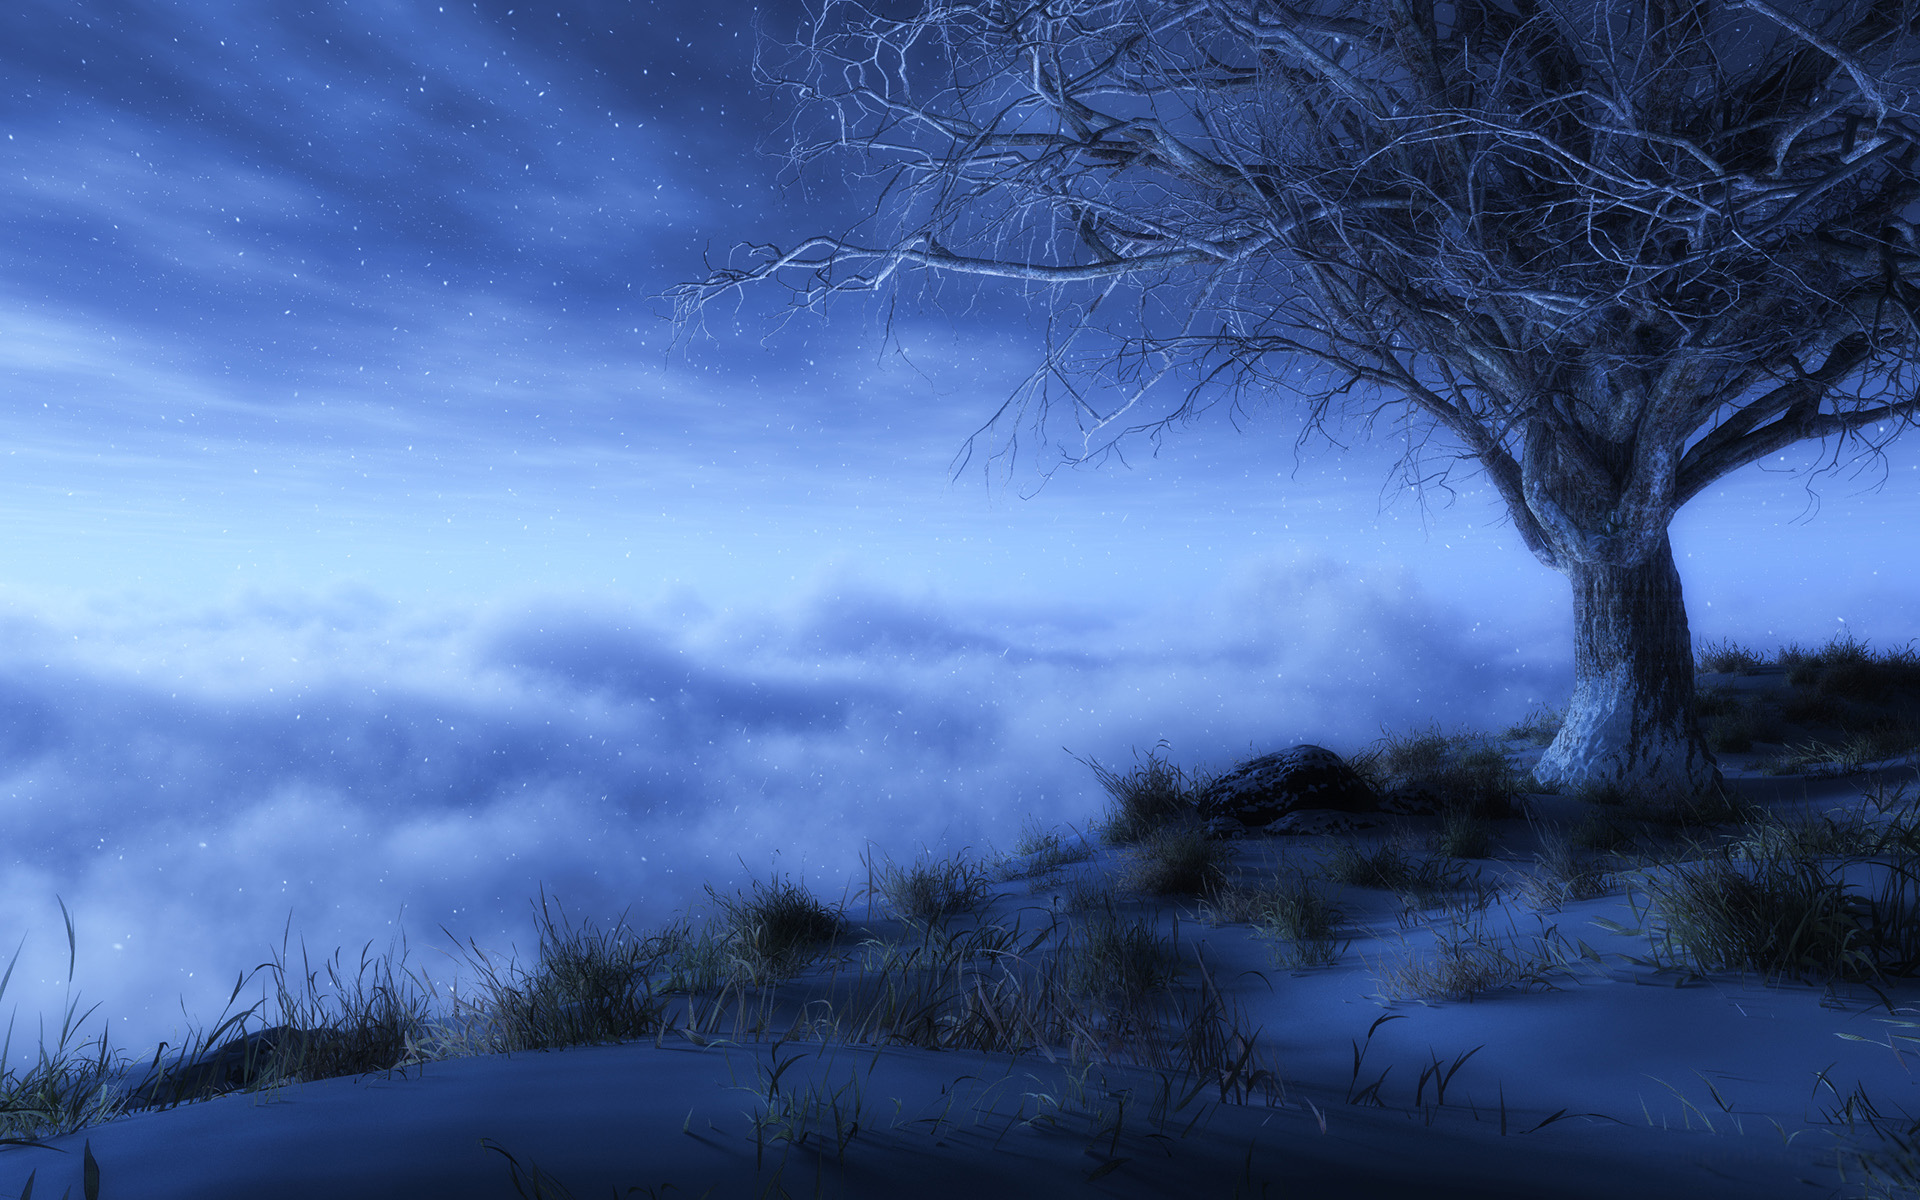 artistic, fantasy, sky, cloud, stars, fog, lonely tree, tree